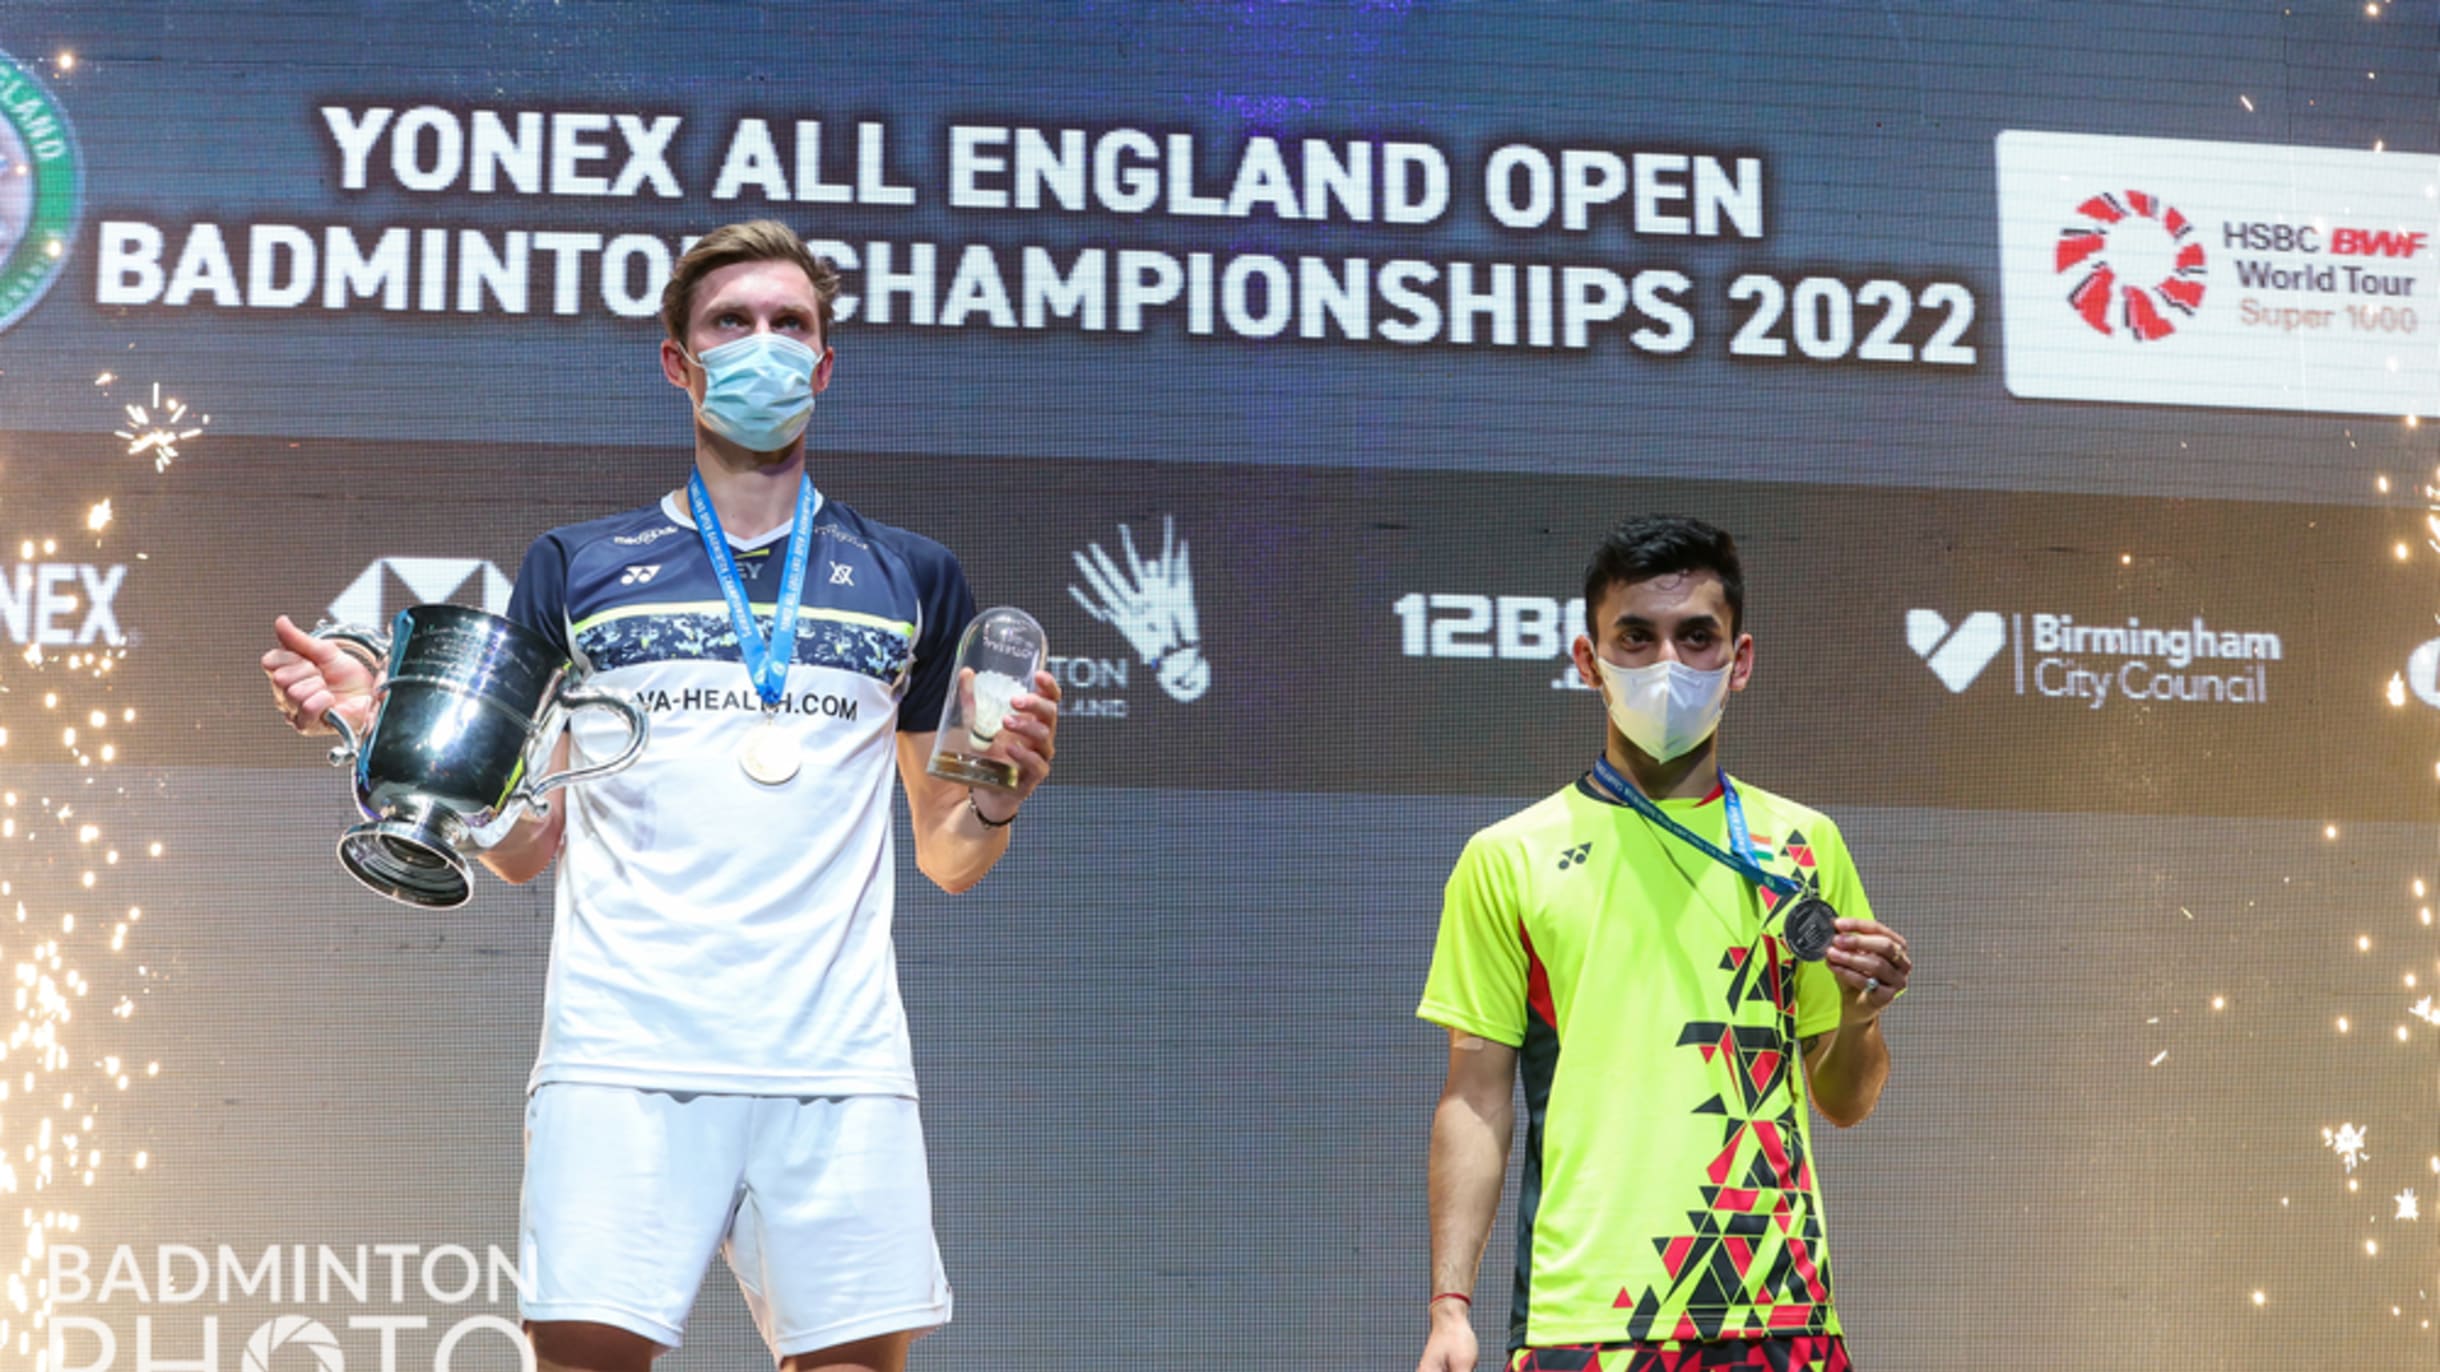 all england badminton championship 2022